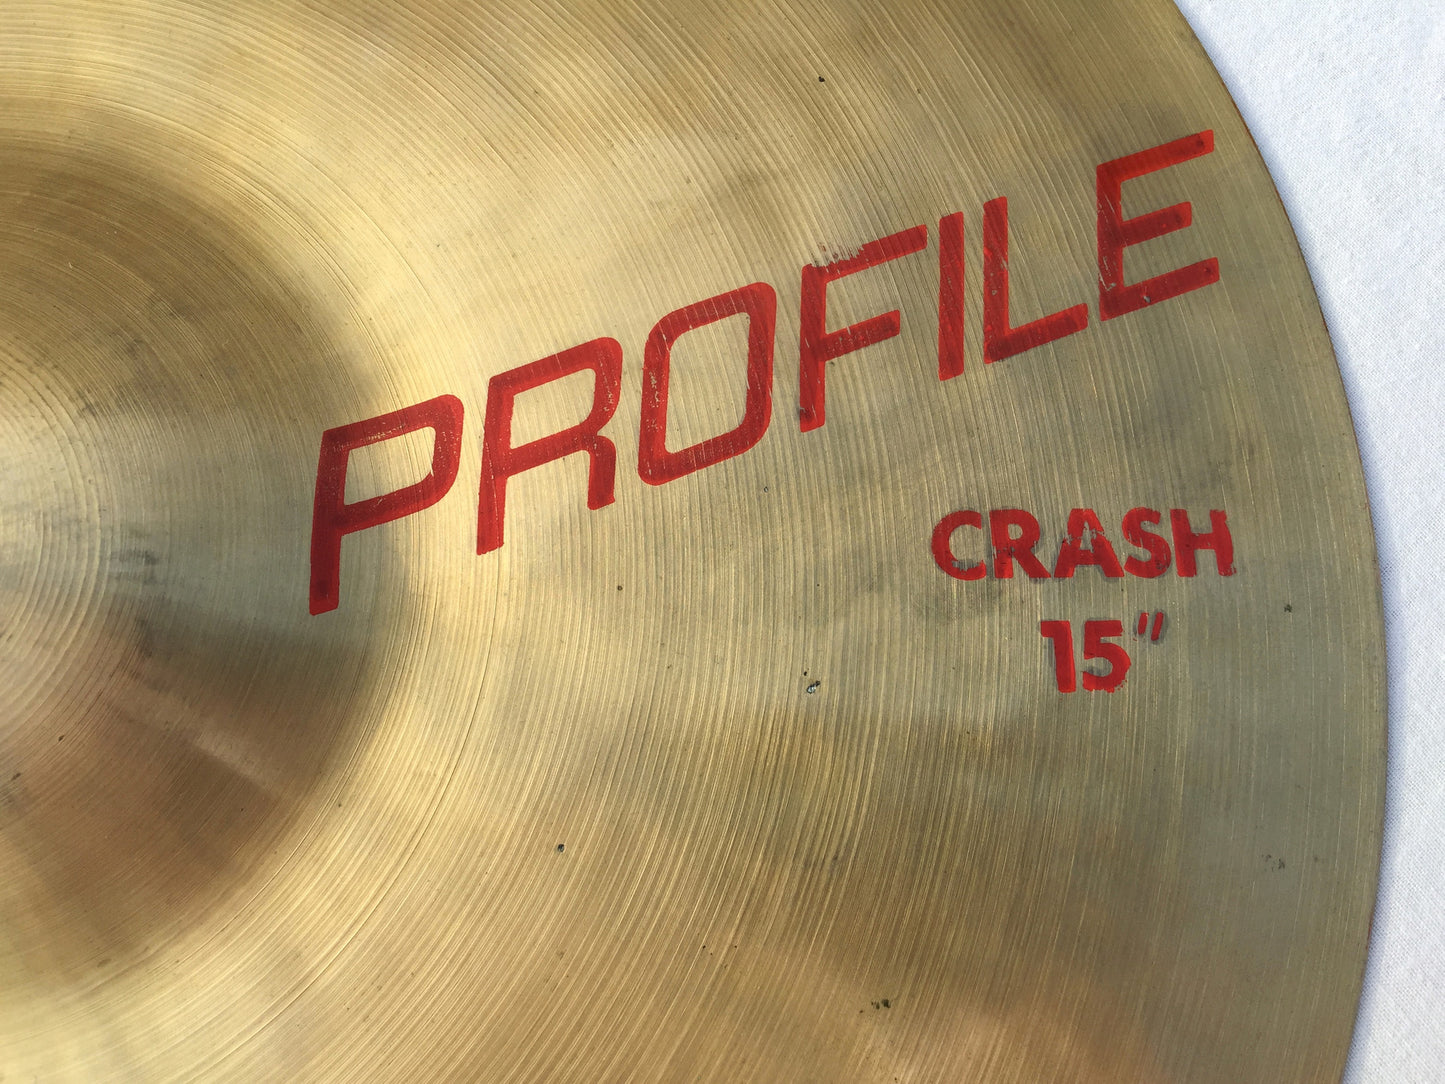 15" Meinl Dragon Profile Crash Cymbal 1396g - Inventory # 248